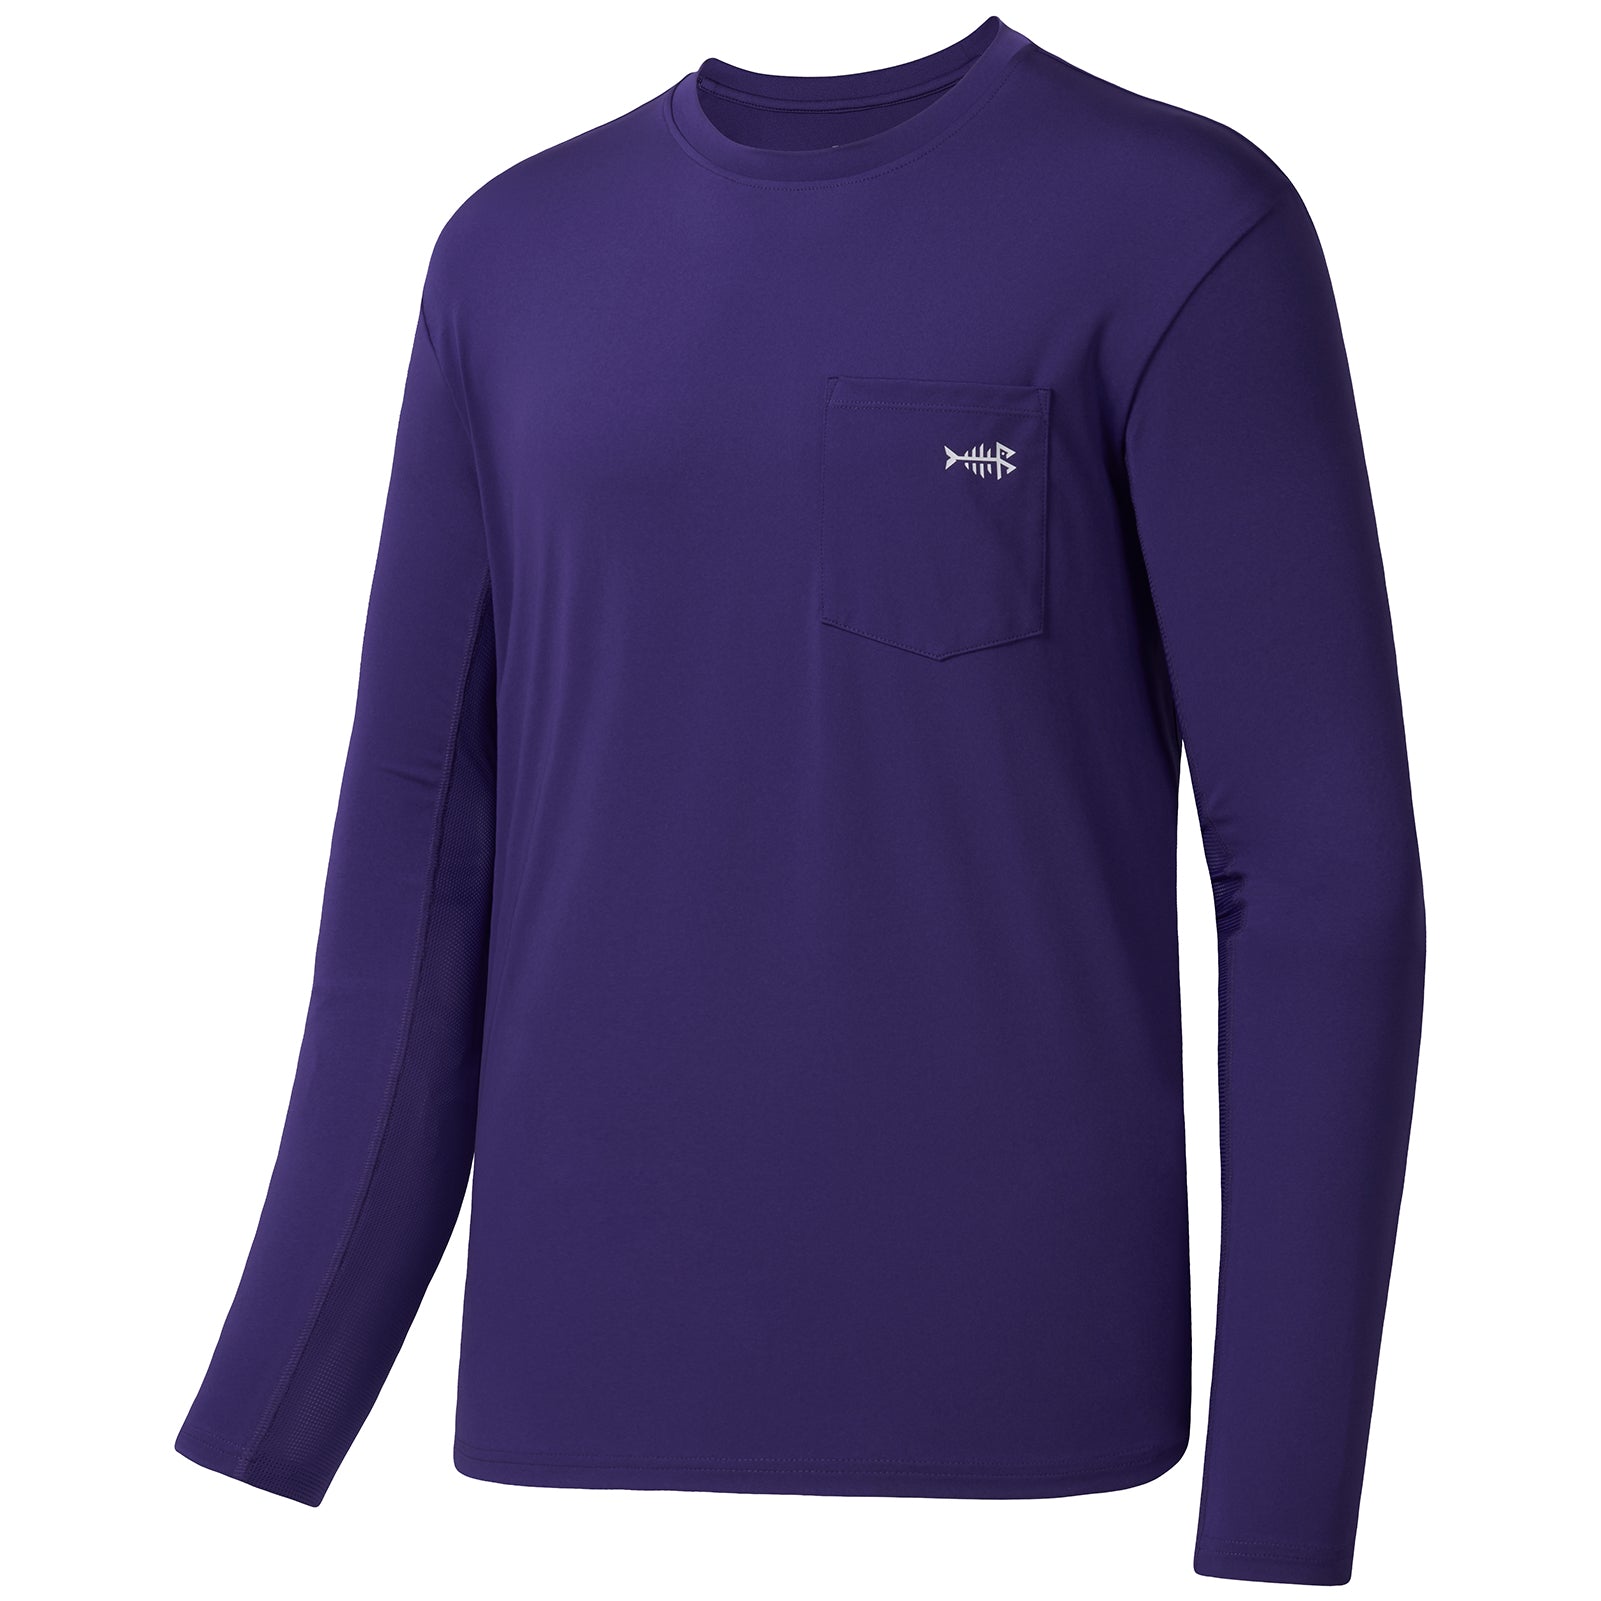 Bassdash Men's UPF 50+ Fishing Shirt Long Sleeve Sun Protection Performance Shirt For Outdoor Sports, Sky Blue/White Logo / 3XL